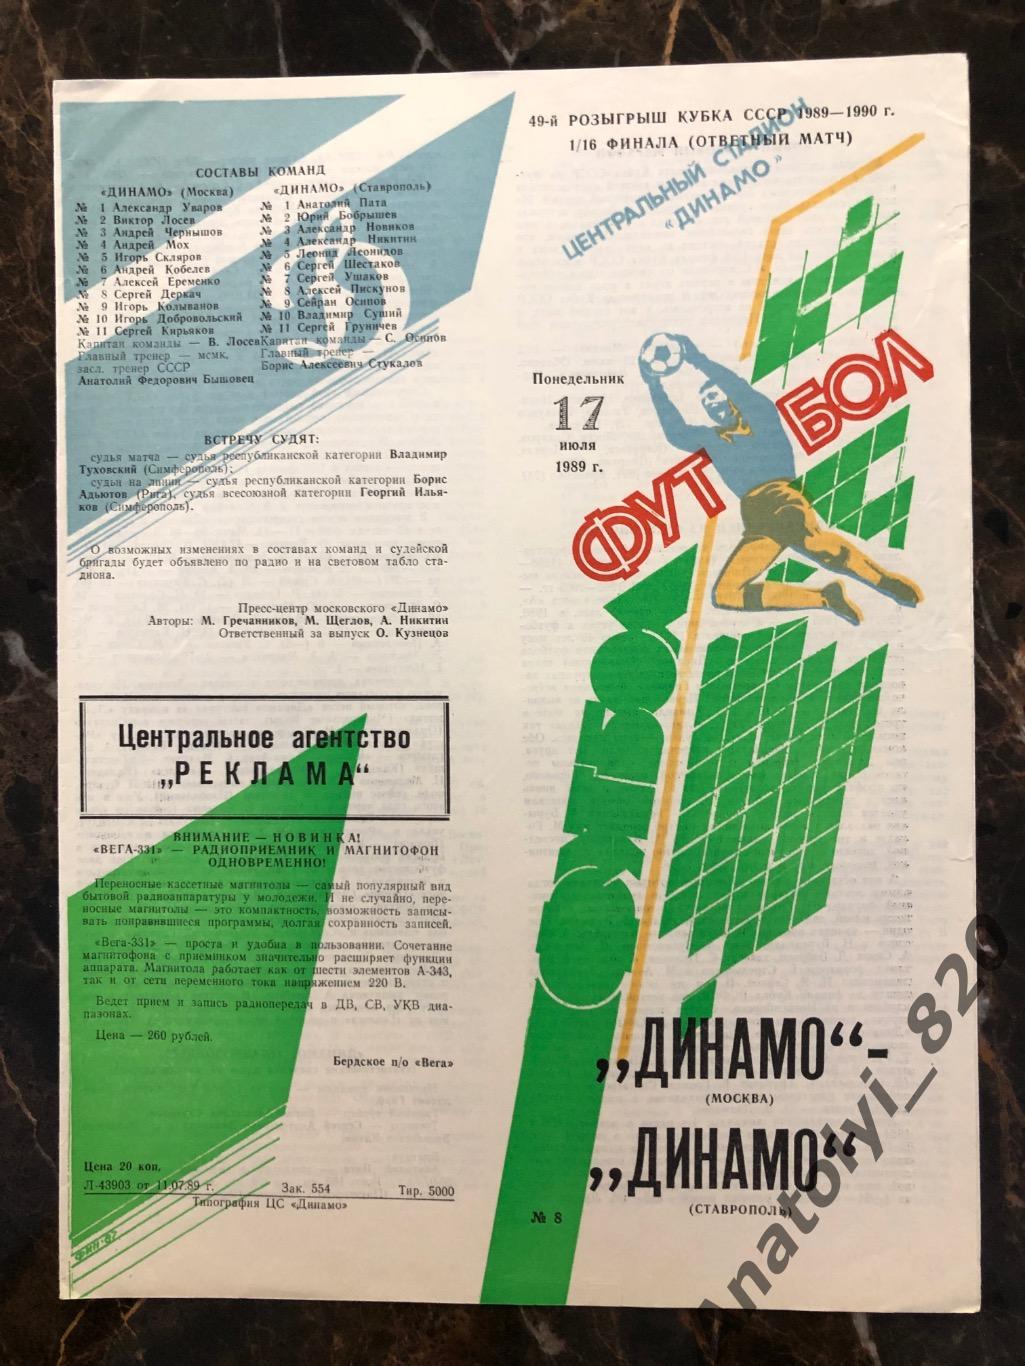 Динамо Москва - Динамо Ставрополь, кубок 1989 год